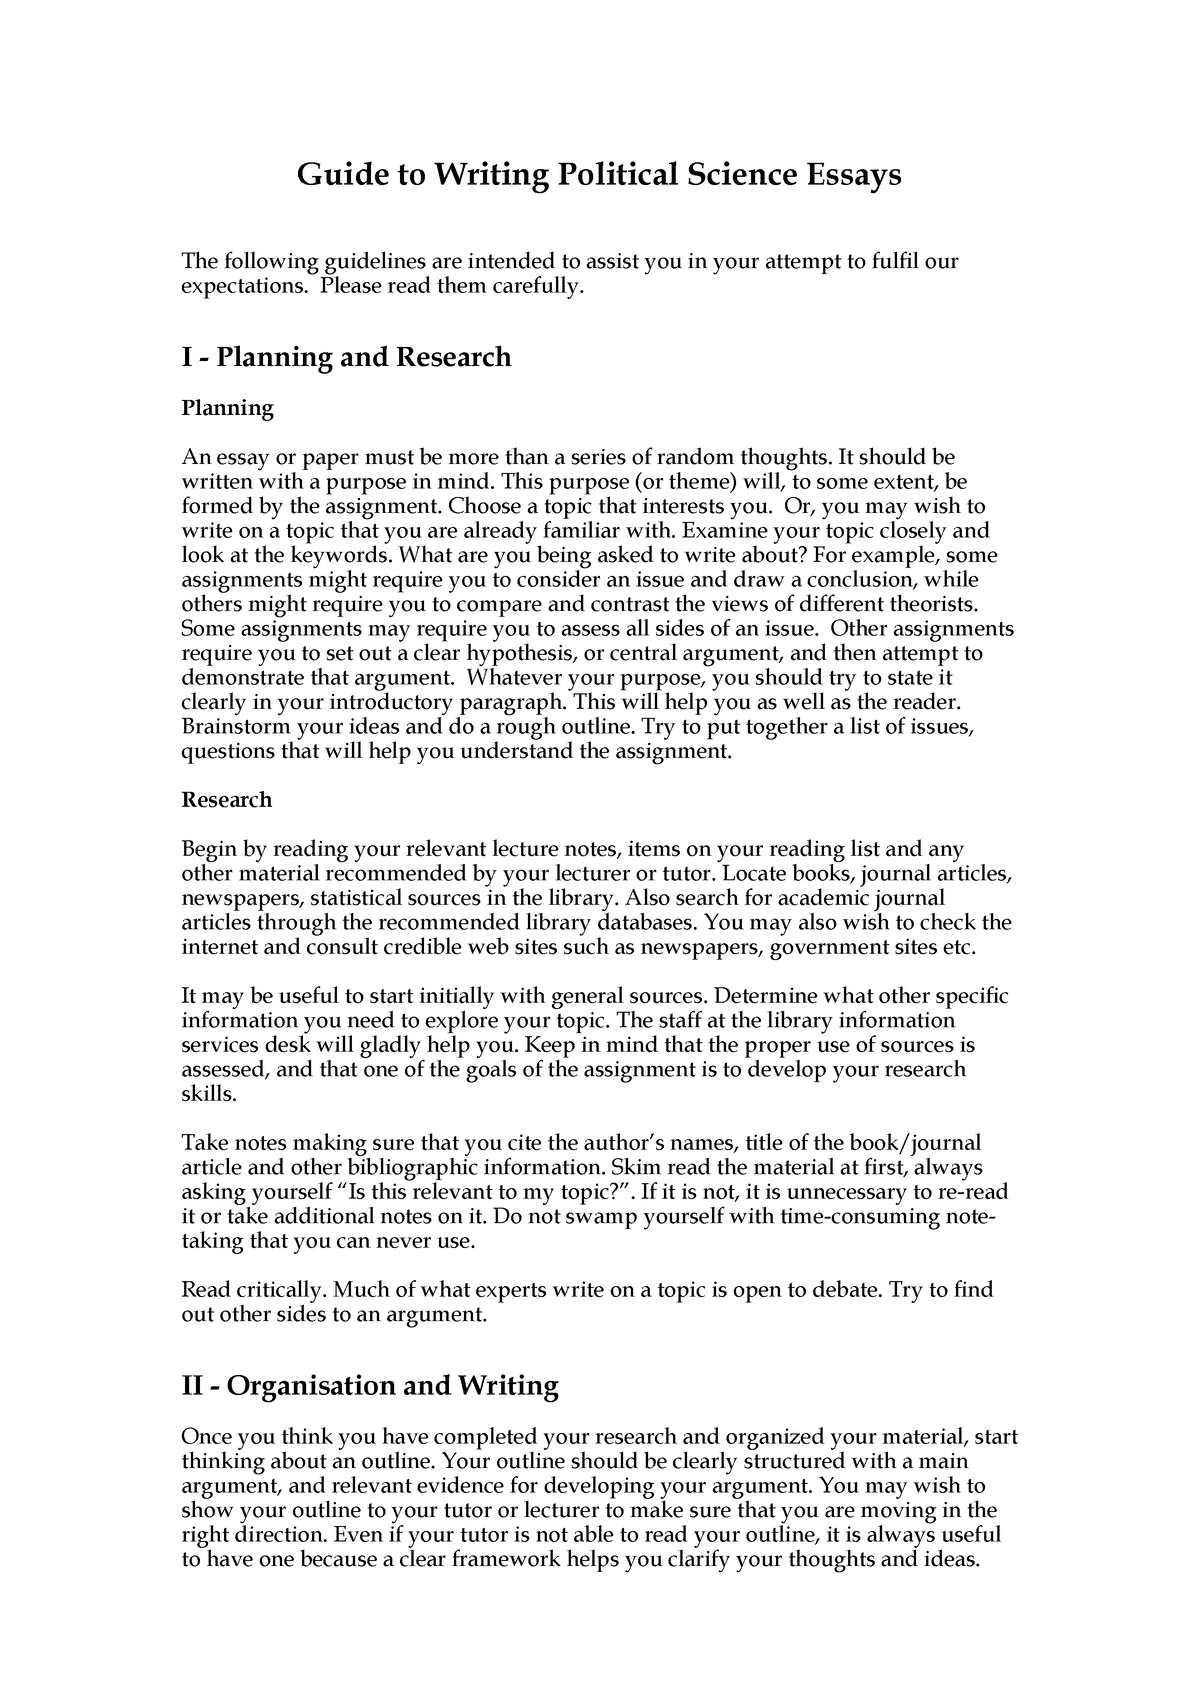 political science essay pdf